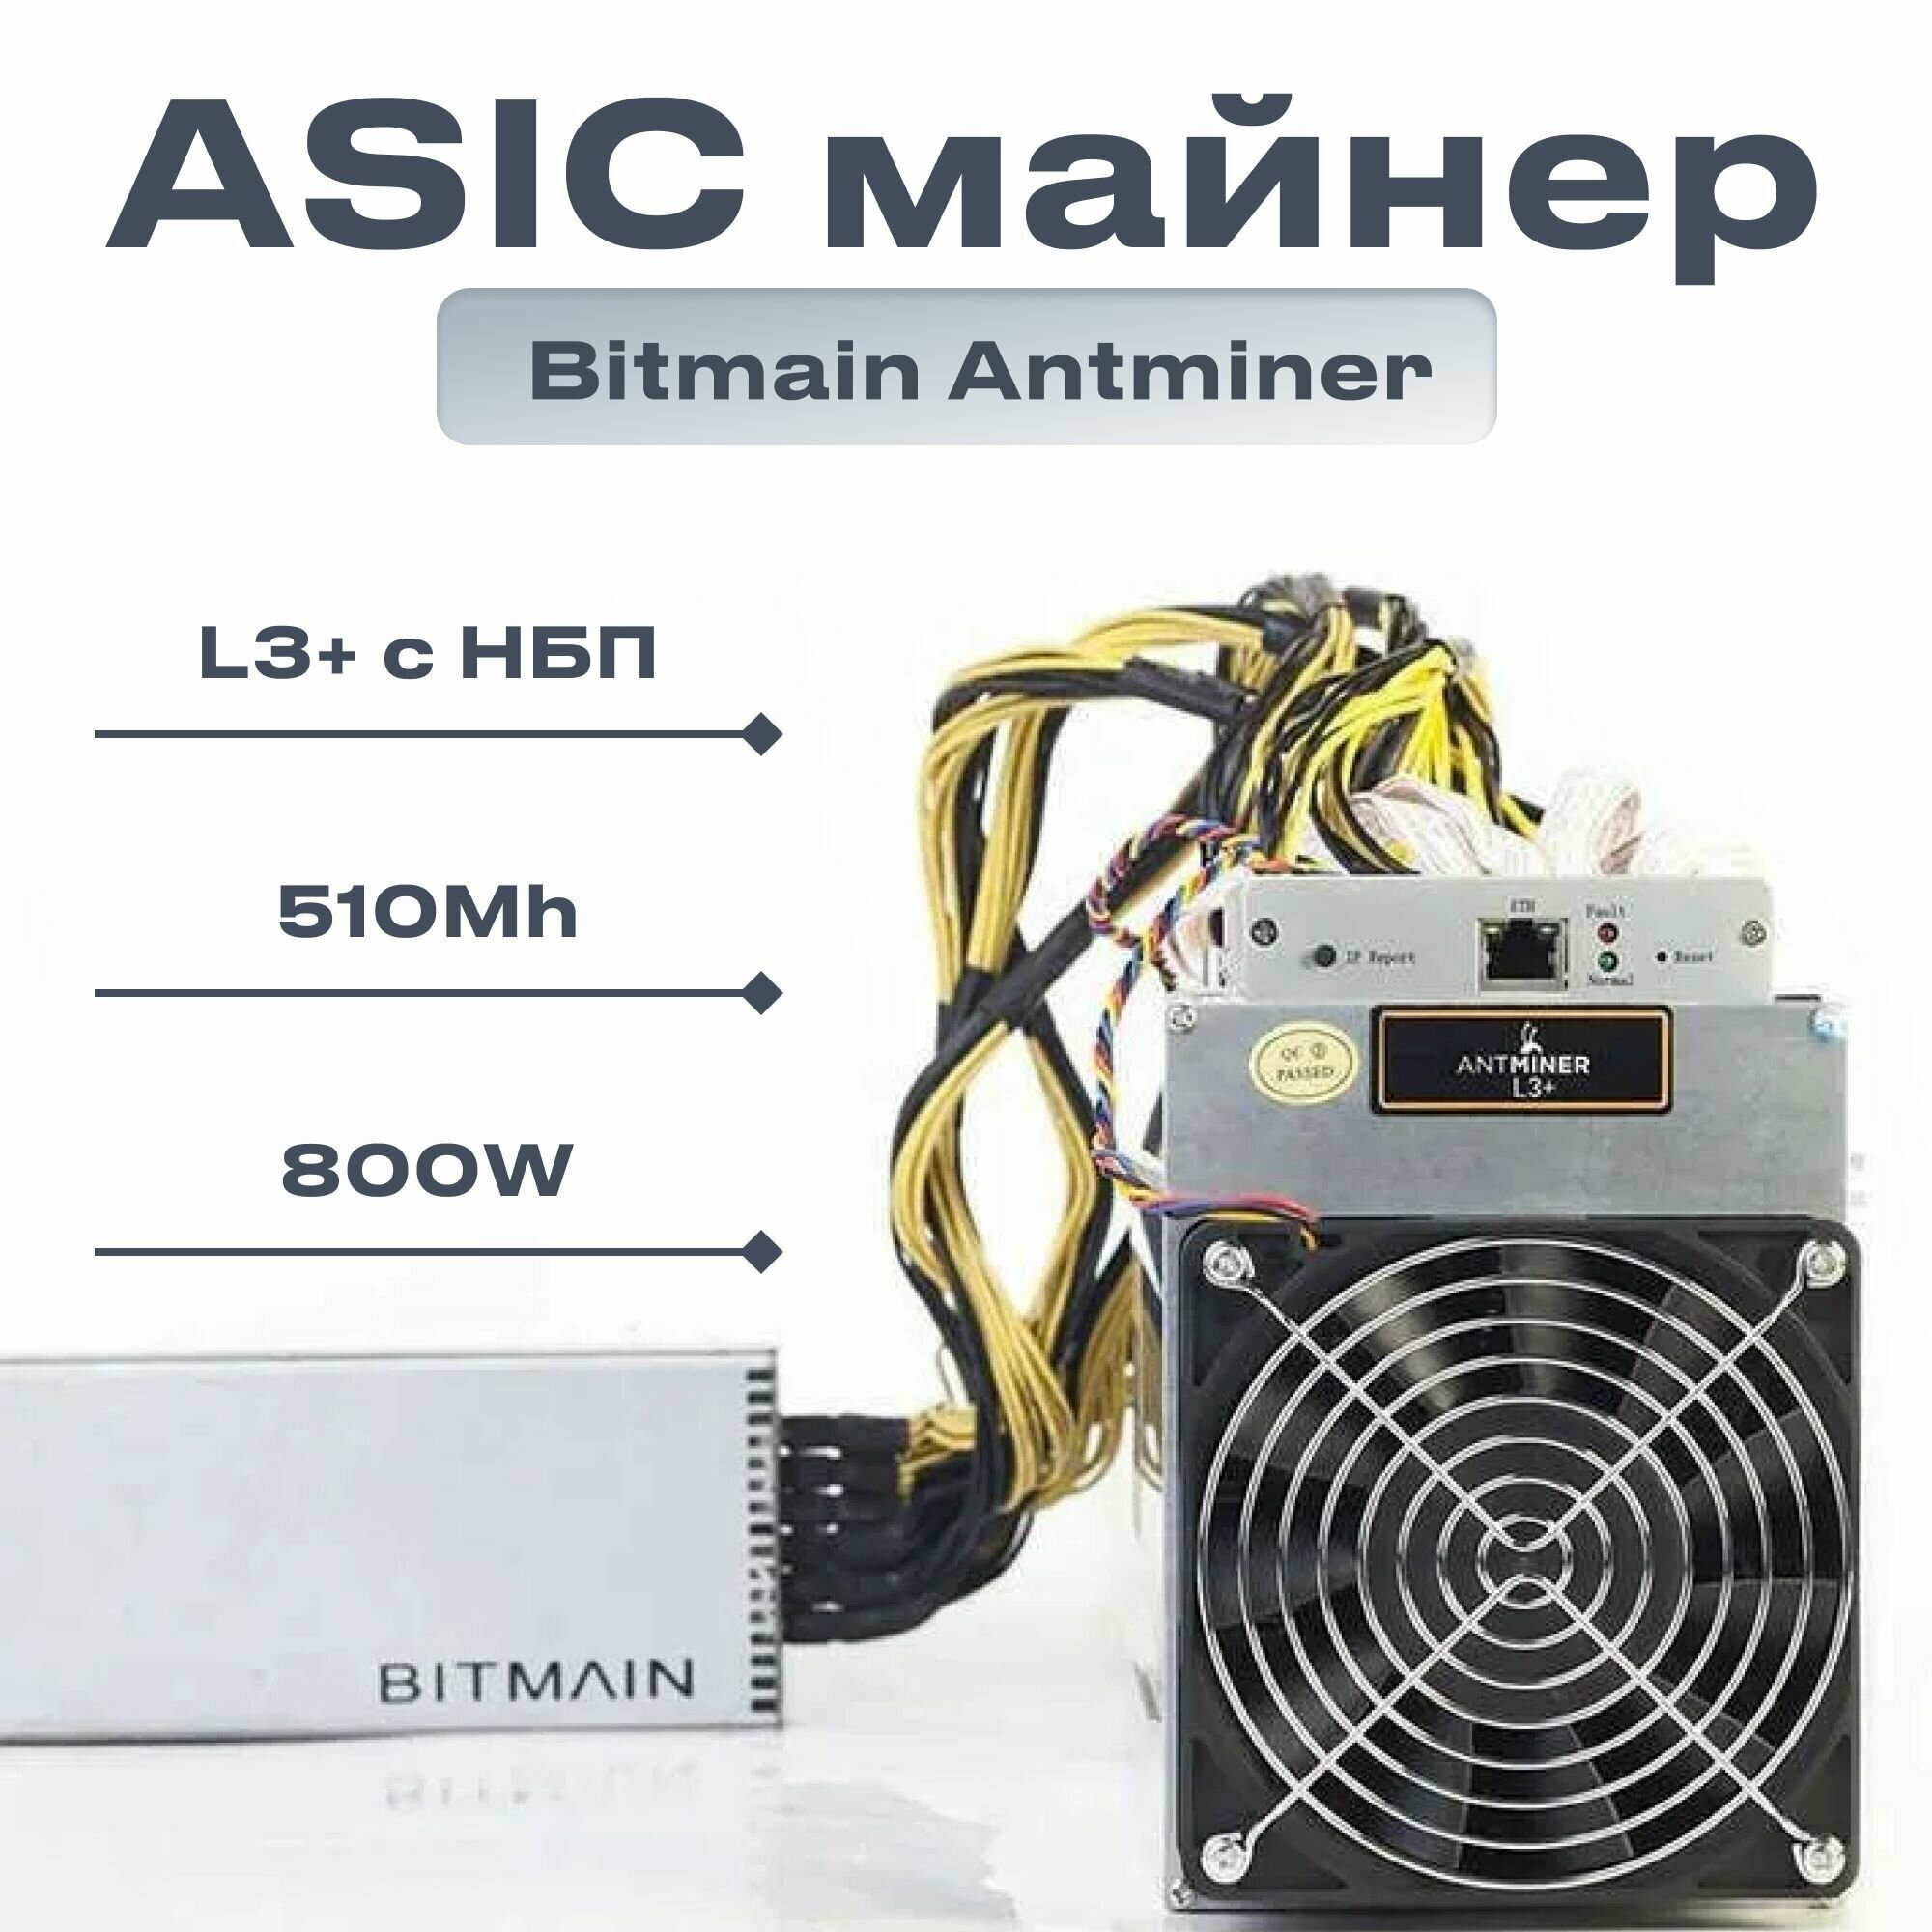 ASIC Bitmain AntMiner L3+ с НБП 510Mh / Антмайнер/